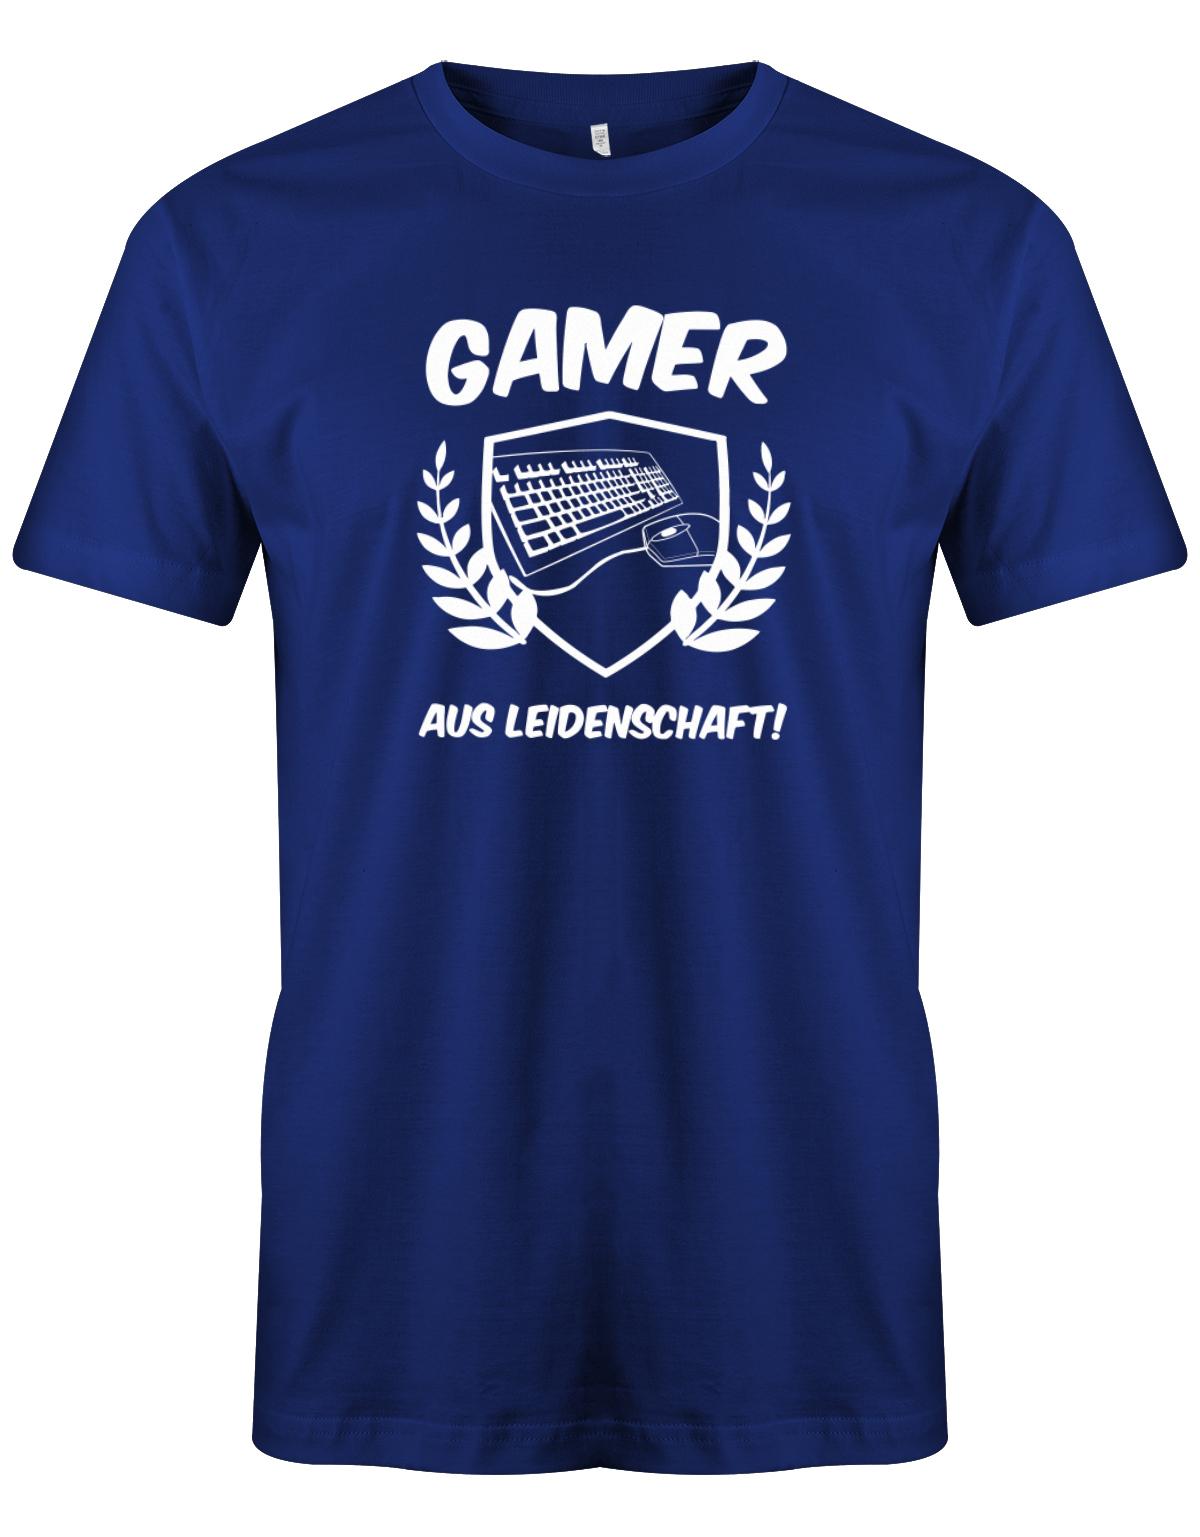 Gamer-Aus-leidenschaft-Herren-Gamer-Shirt-Royalblau